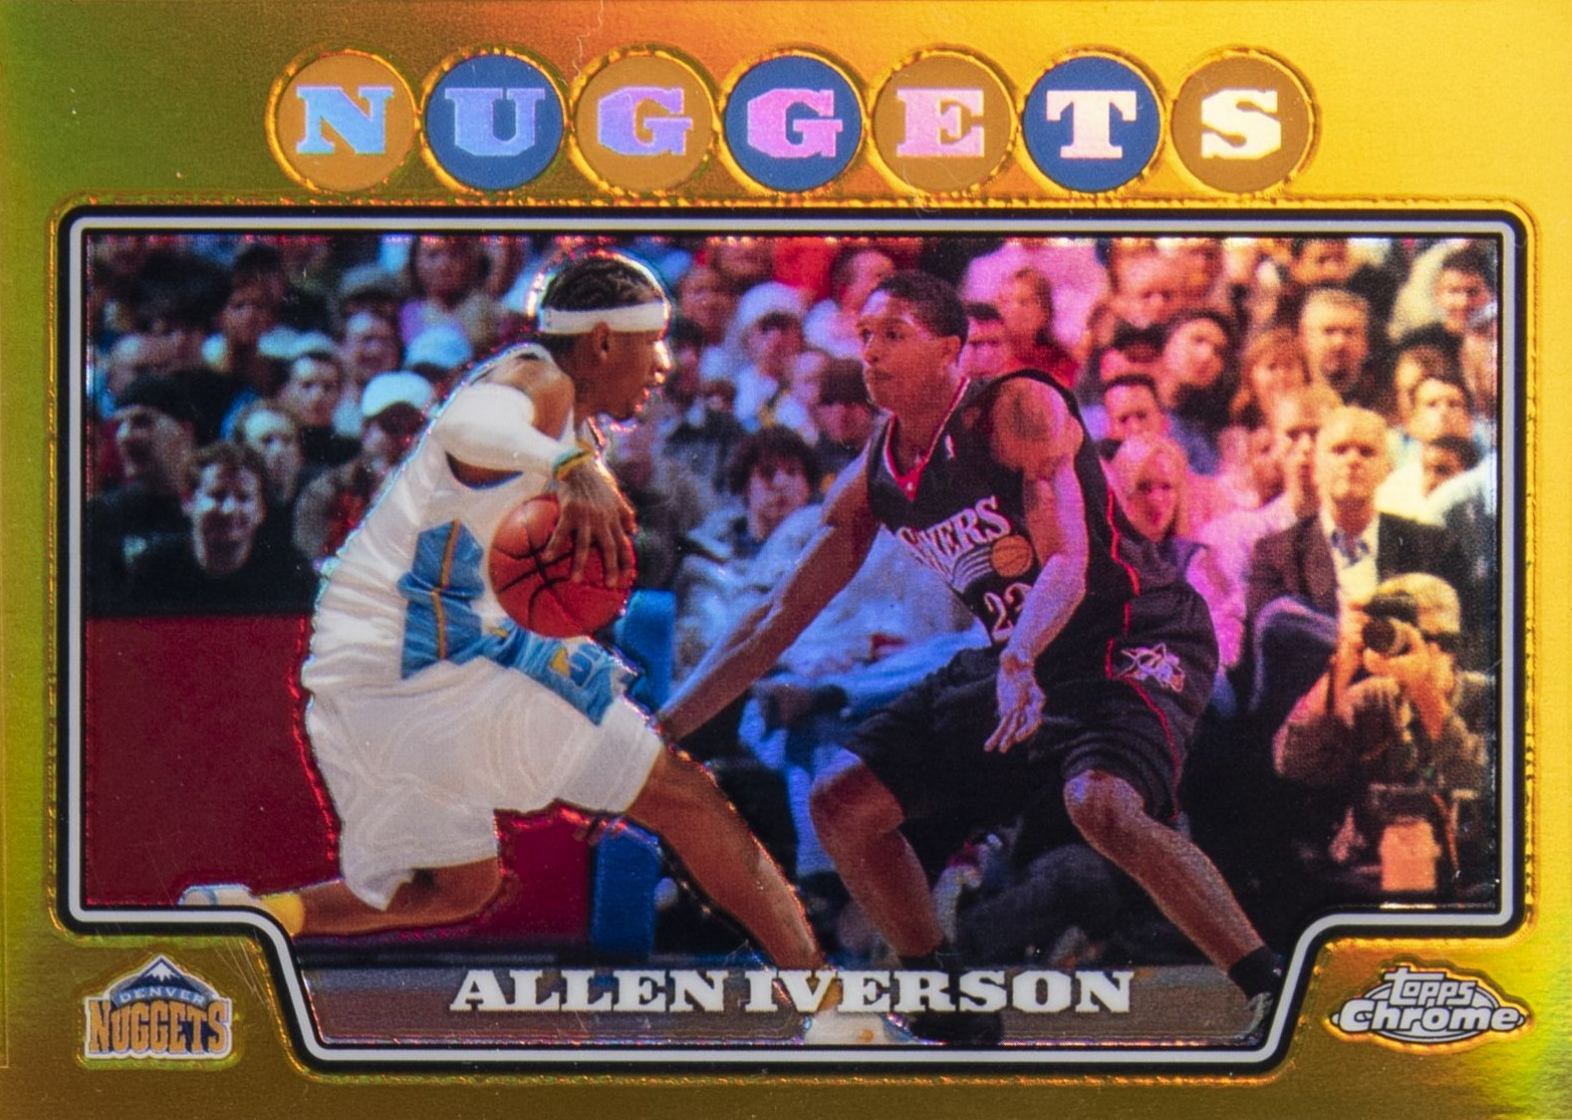 2008 Topps Chrome Allen Iverson #3 Basketball Card